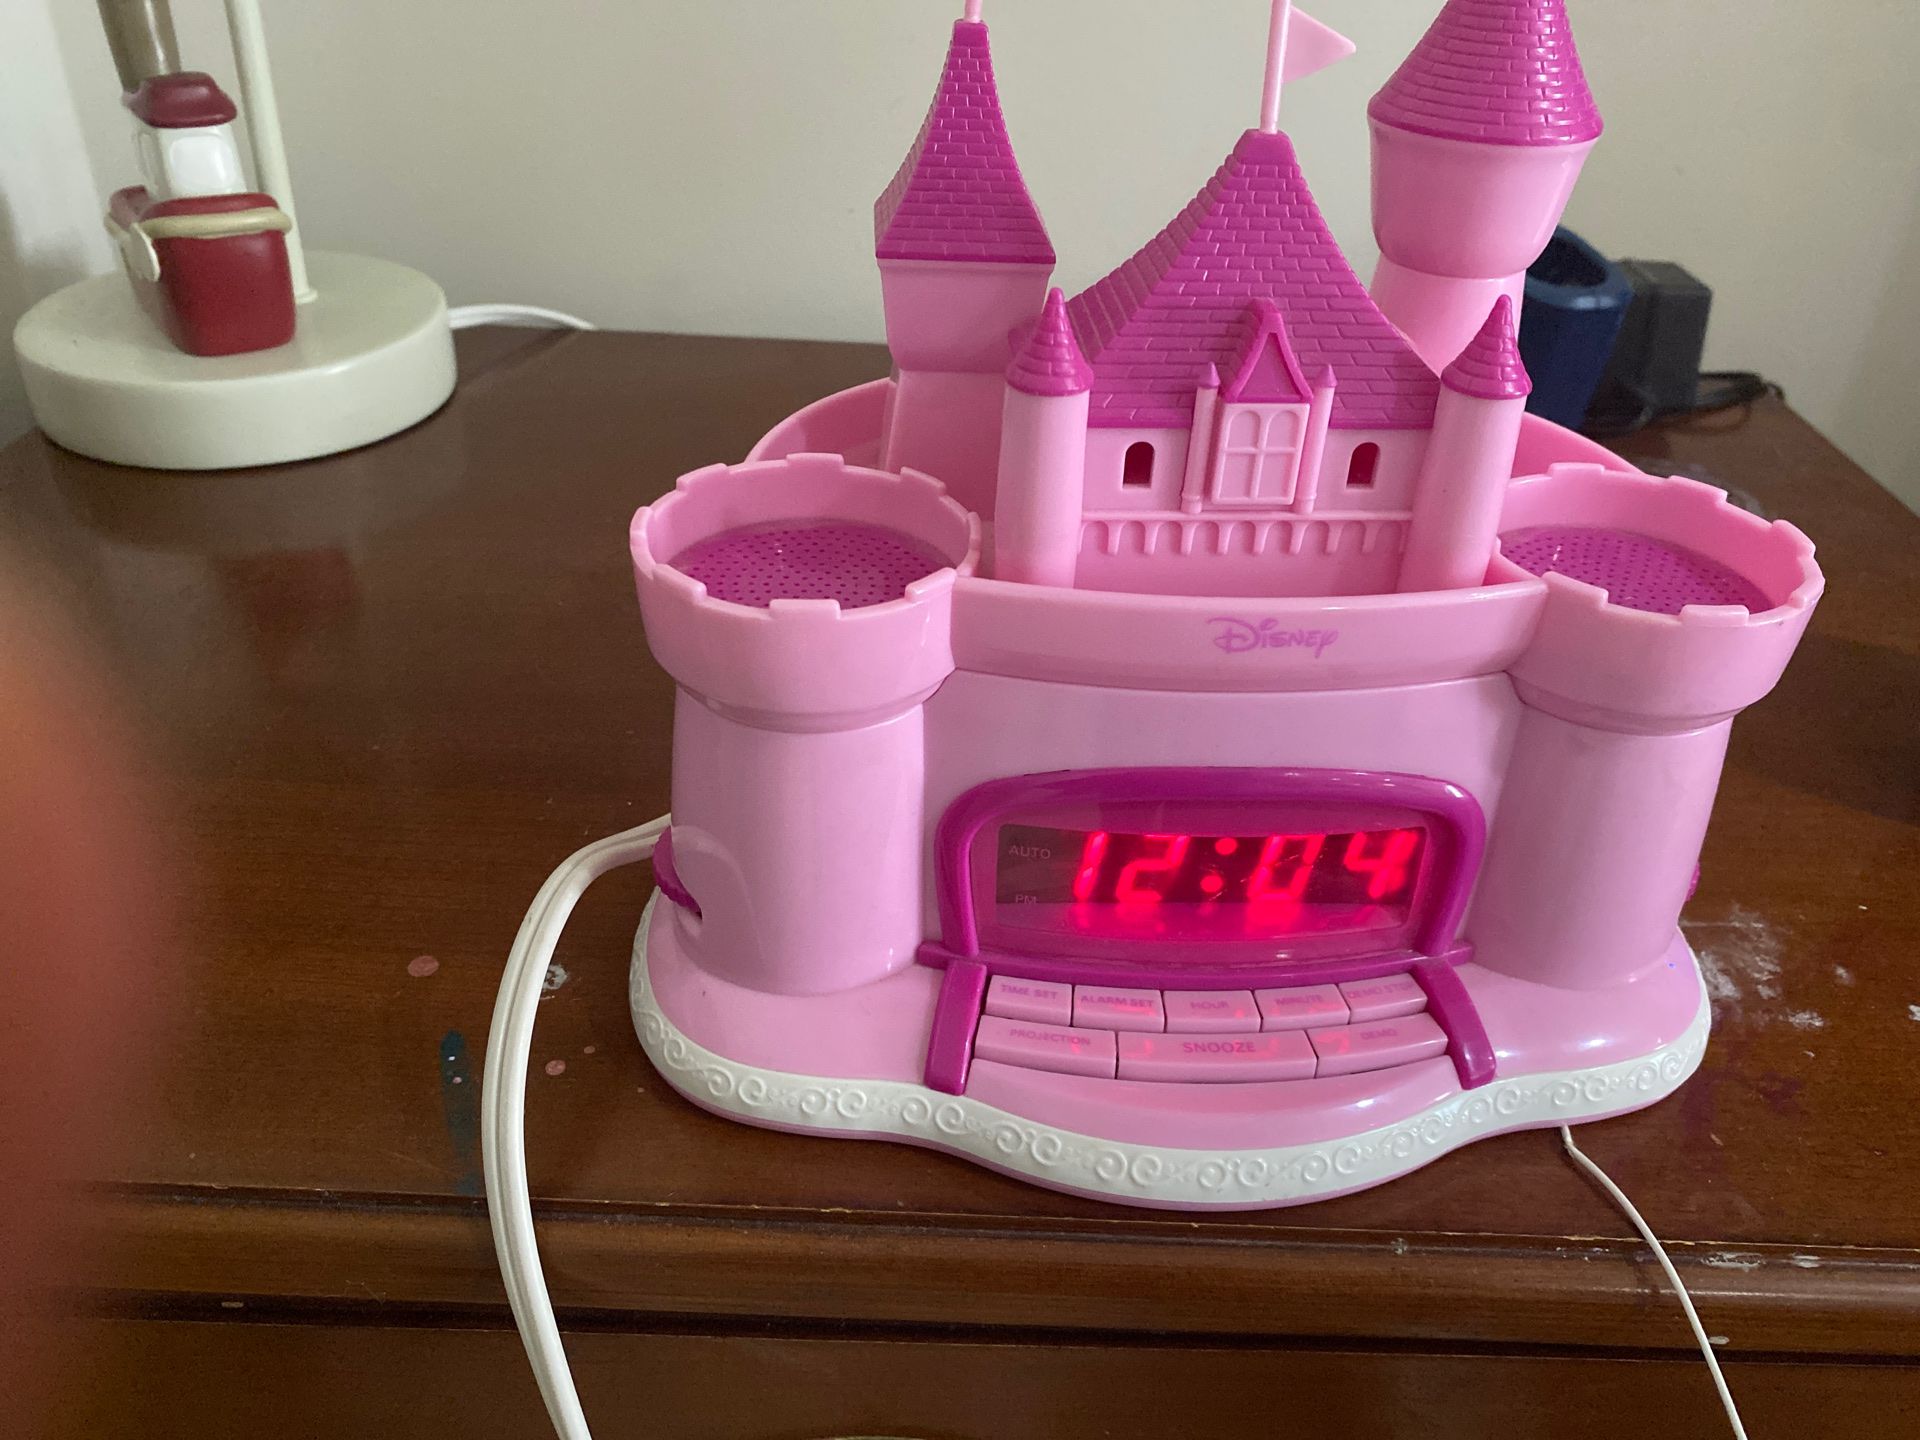 Disney Alarm Musical Clock